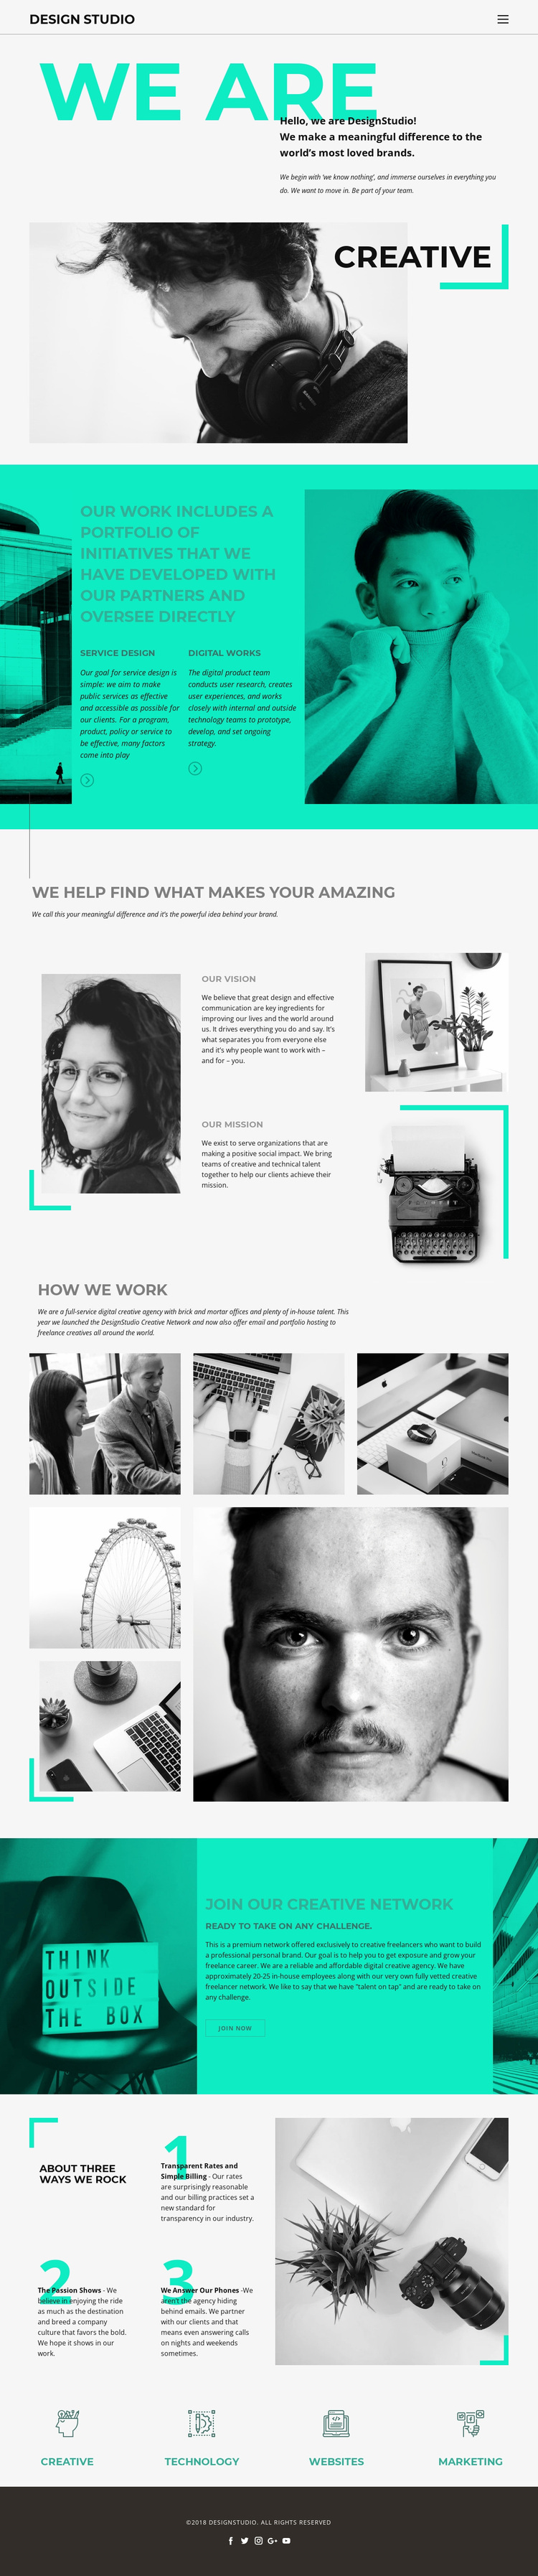 We are creative business Website Design